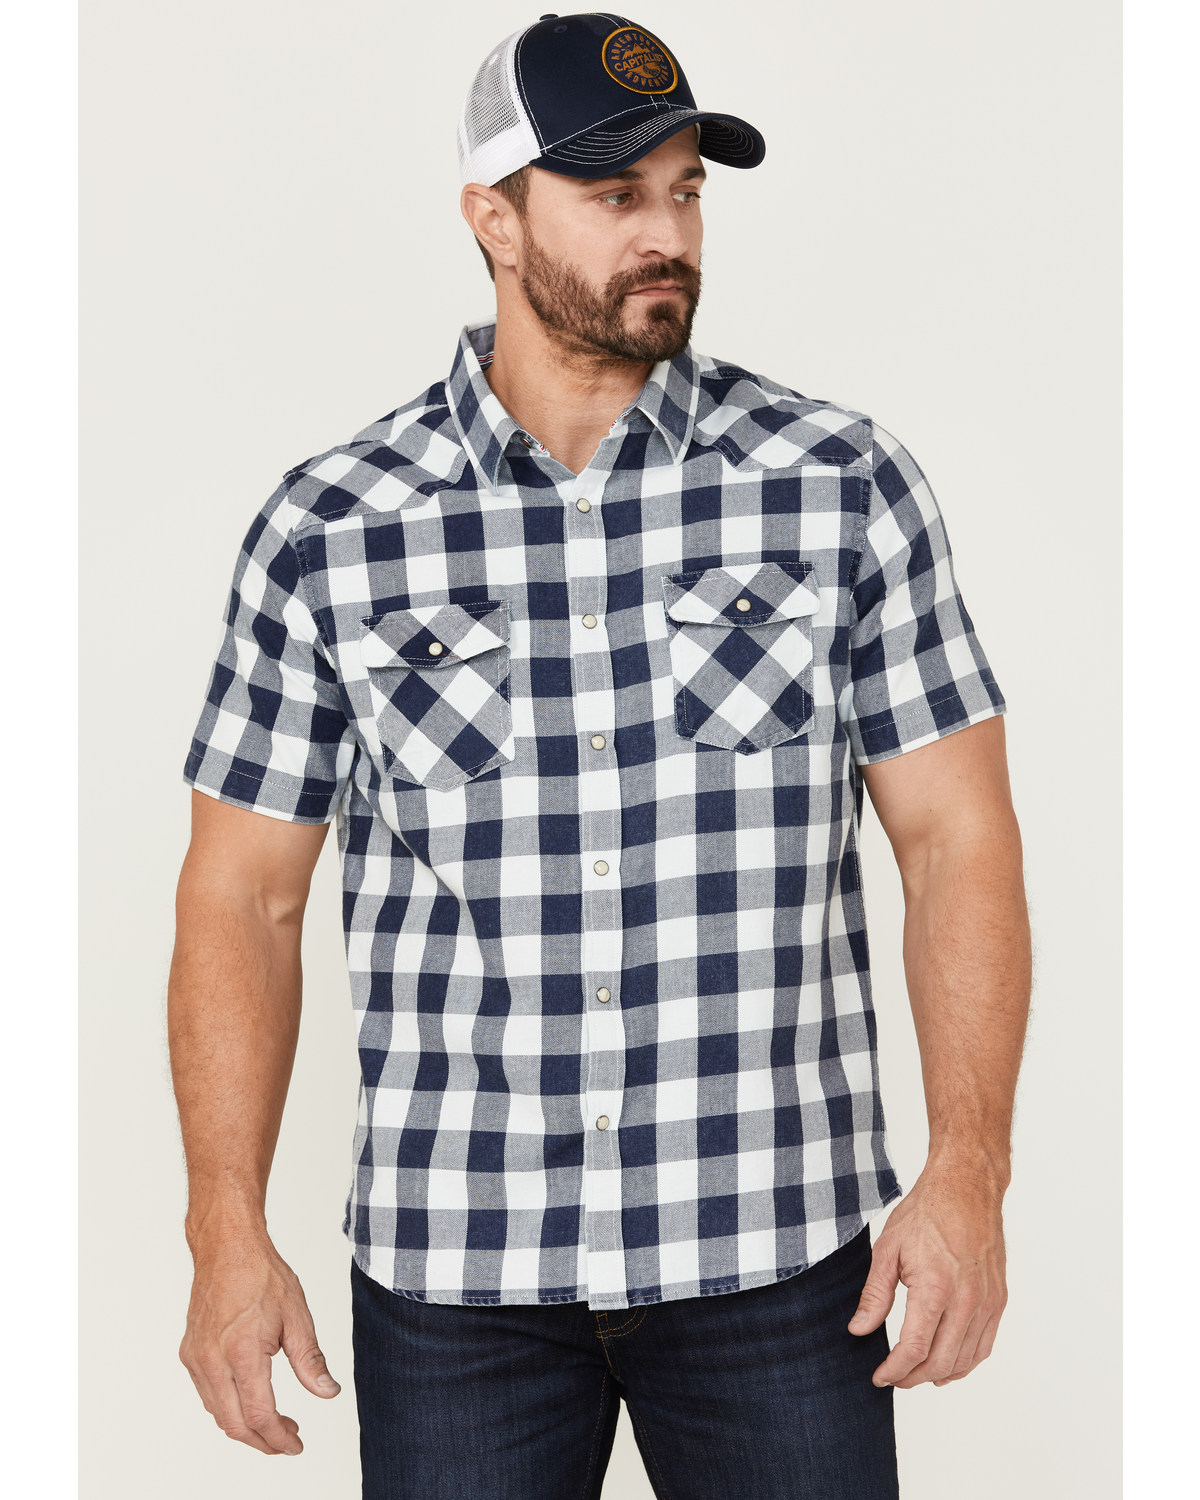 Flag & Anthem Men's McLennan Vintage Plaid Short Sleeve Snap Western Shirt